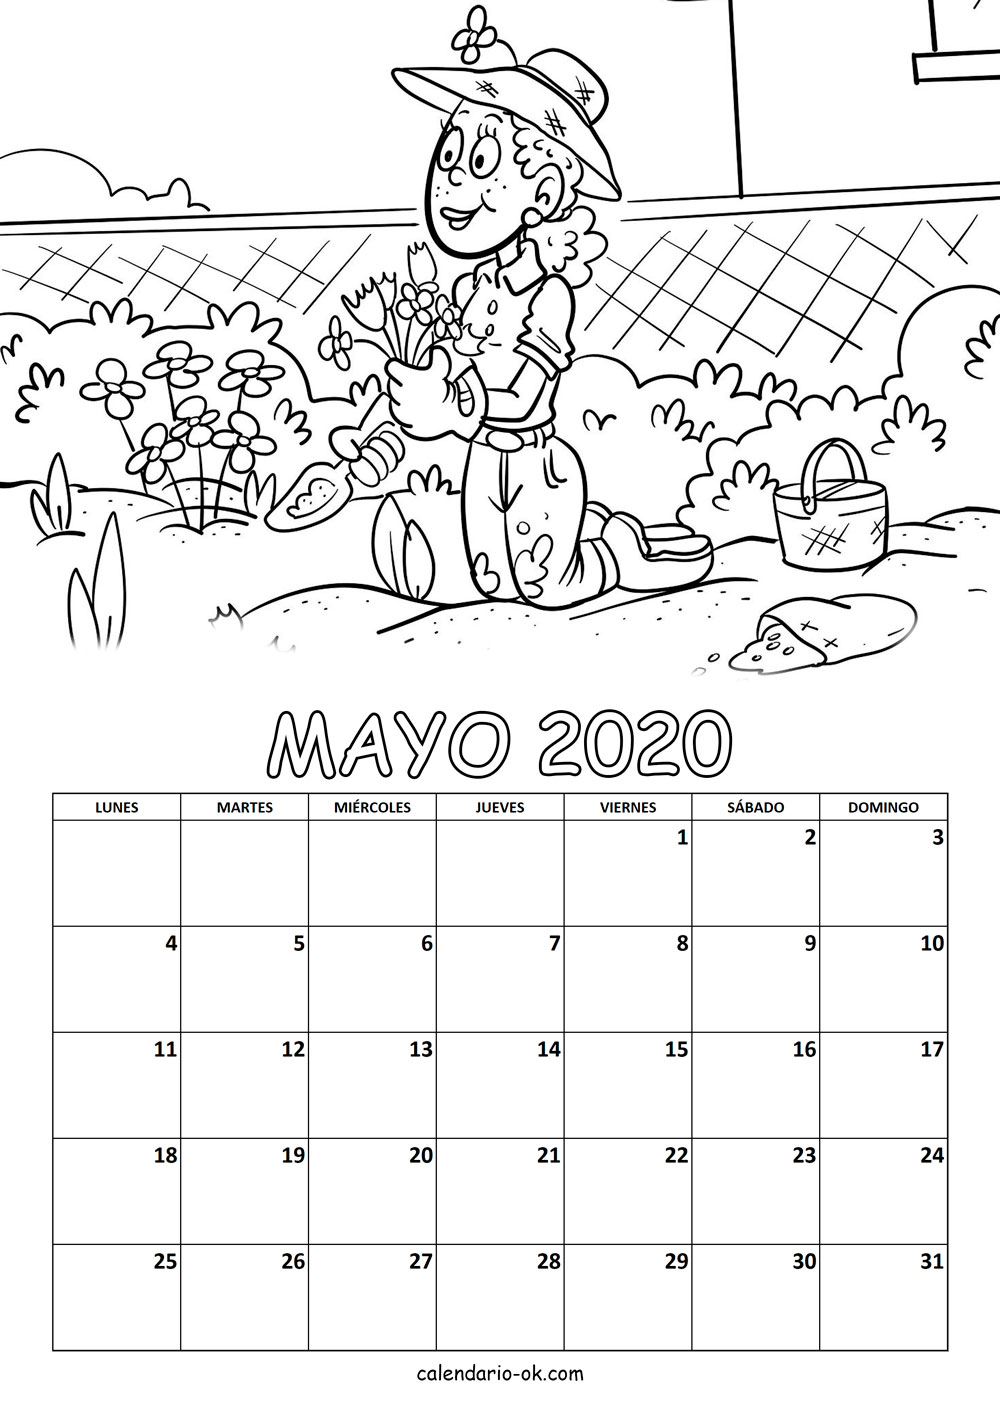 Calendario MAYO 2020 COLOREAR